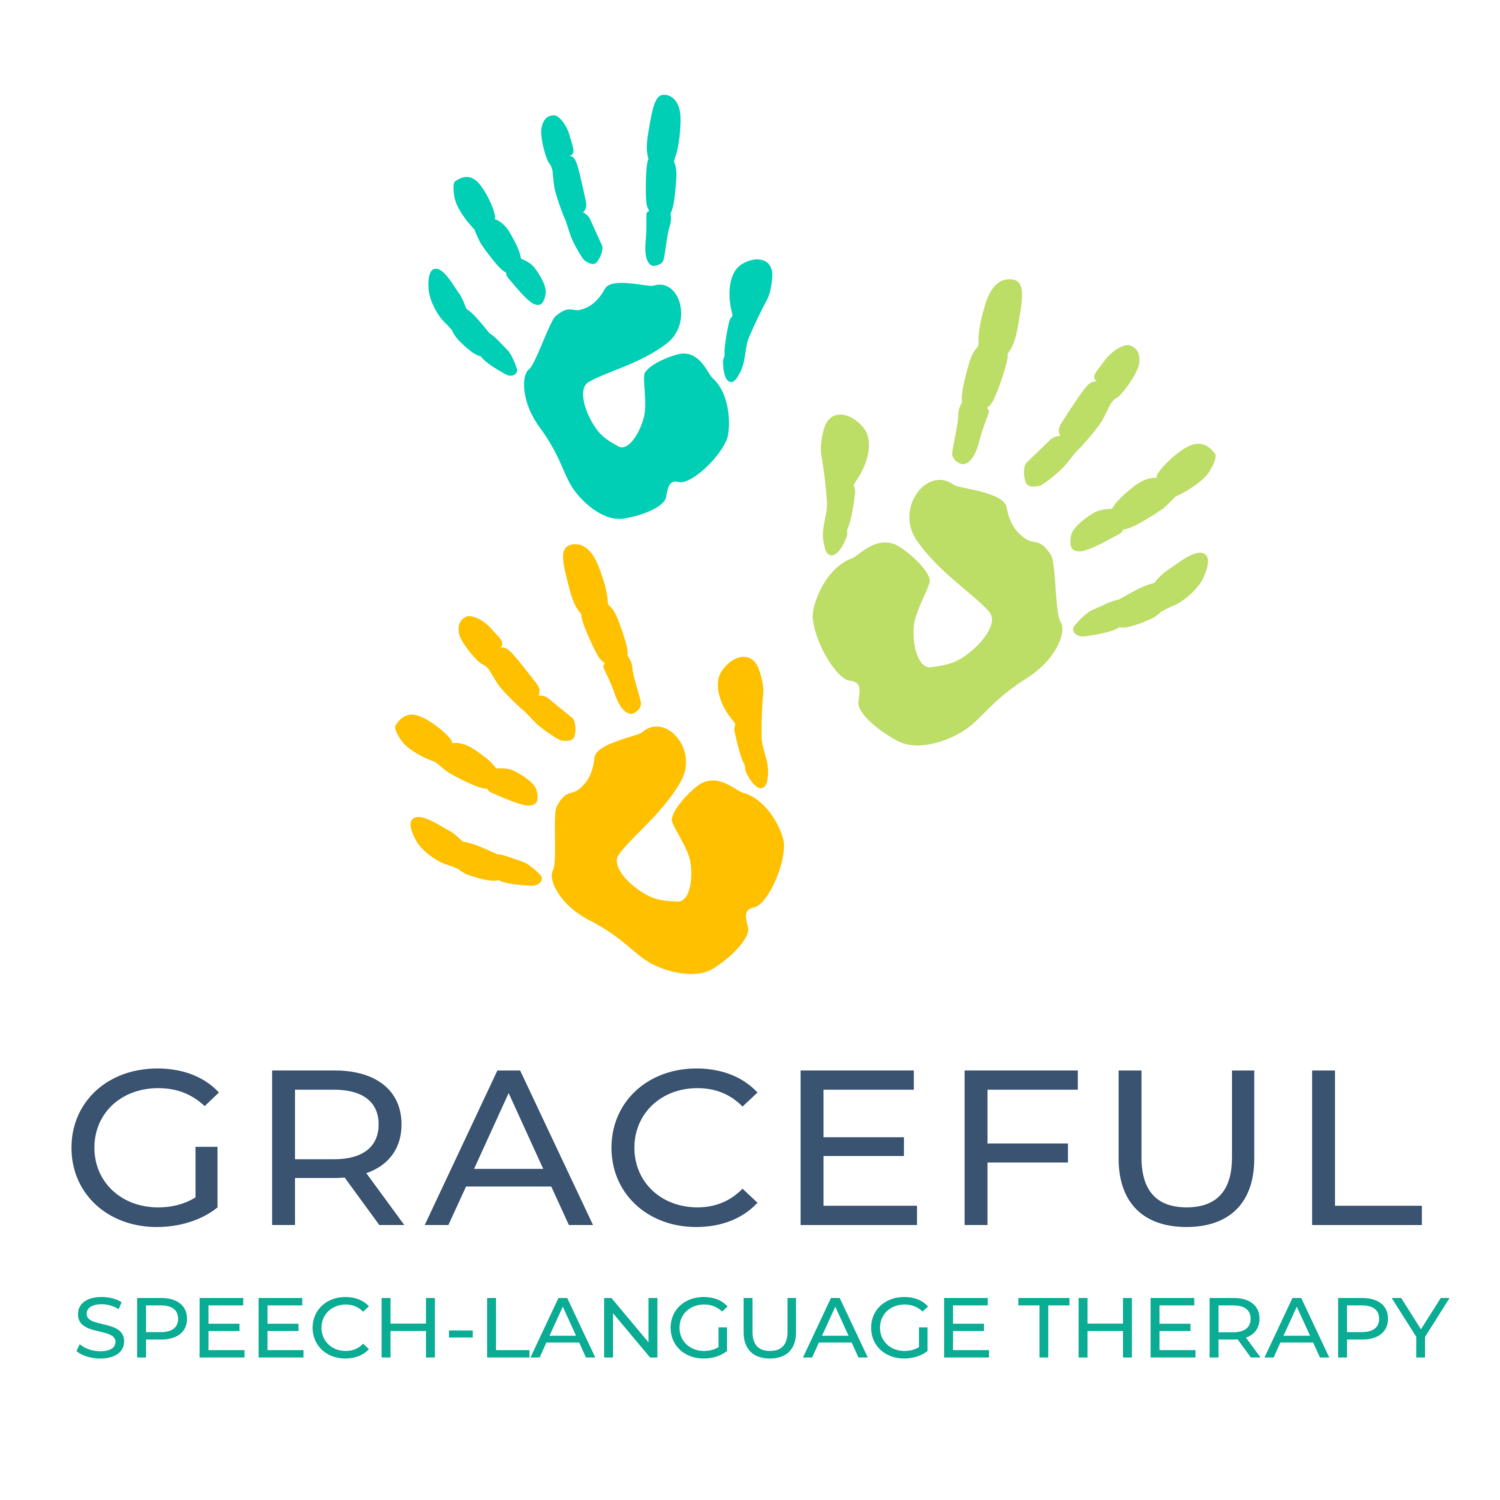 Graceful Speech-Language Therapy